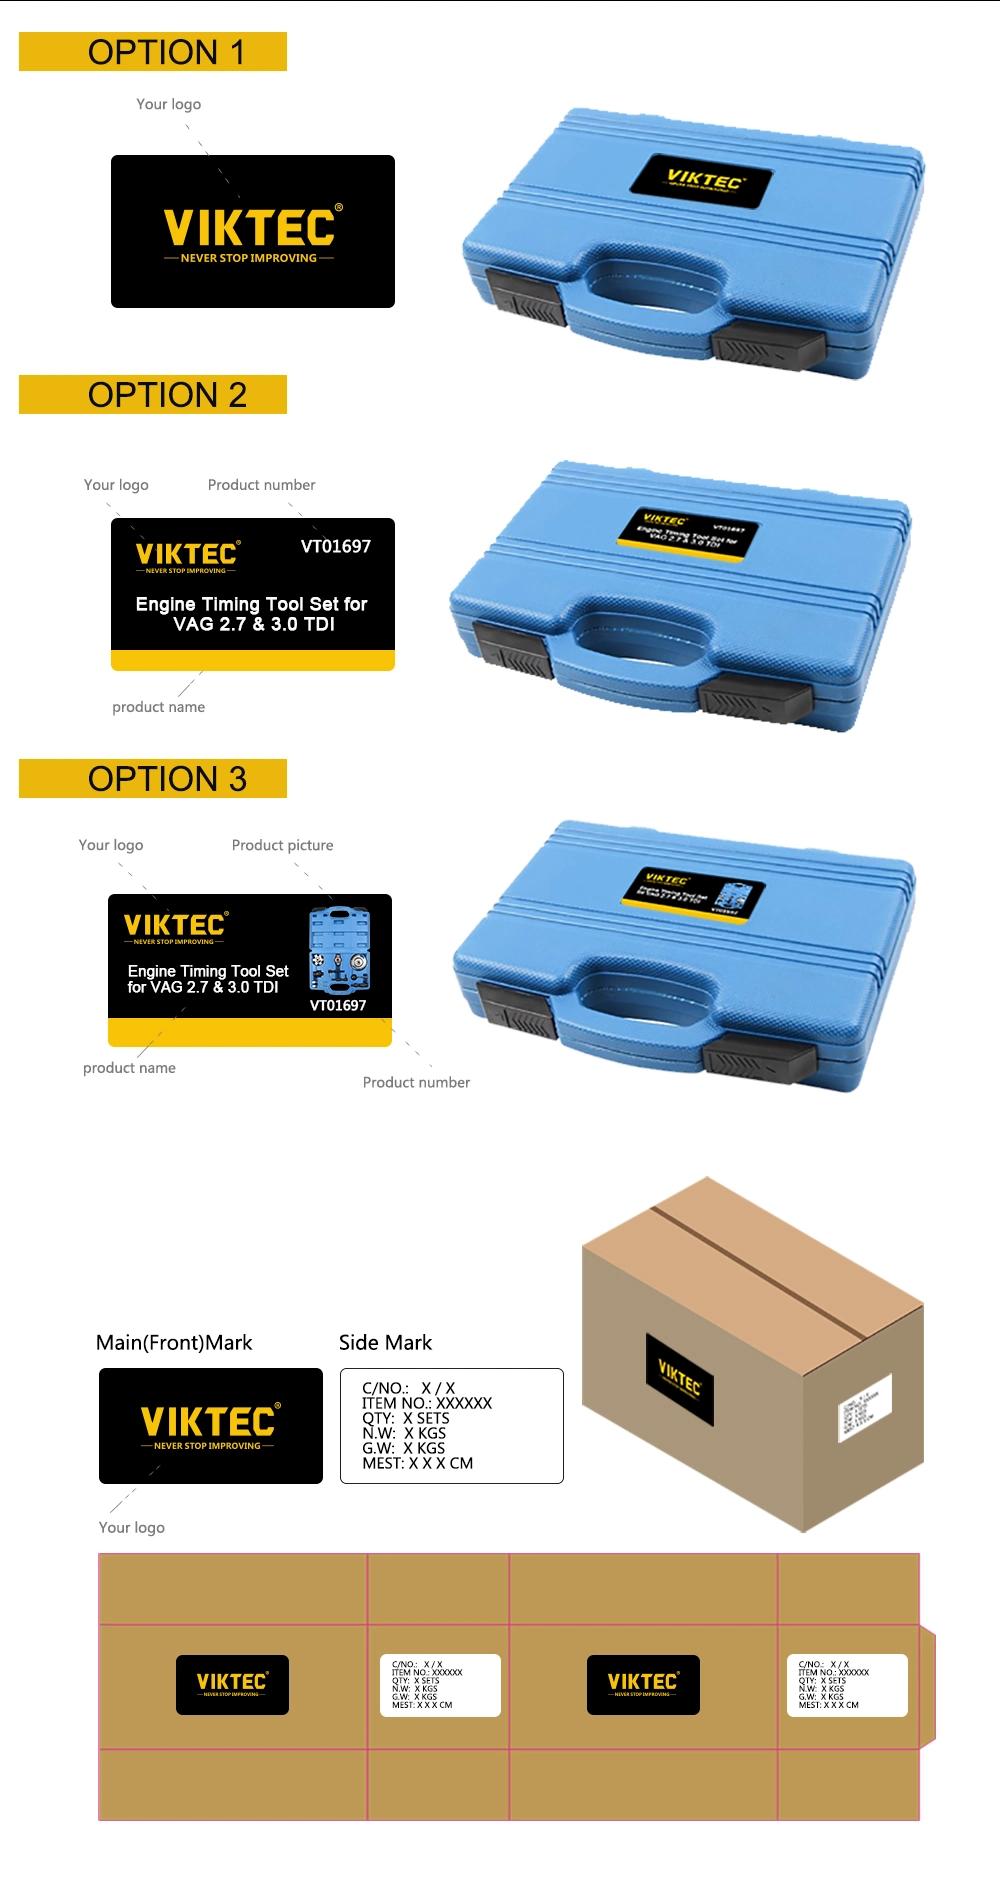 Viktec Automotive Repairing 22PC Brake Rewind Pad Wind Back Tools and Piston Compression Set (VT01027B)